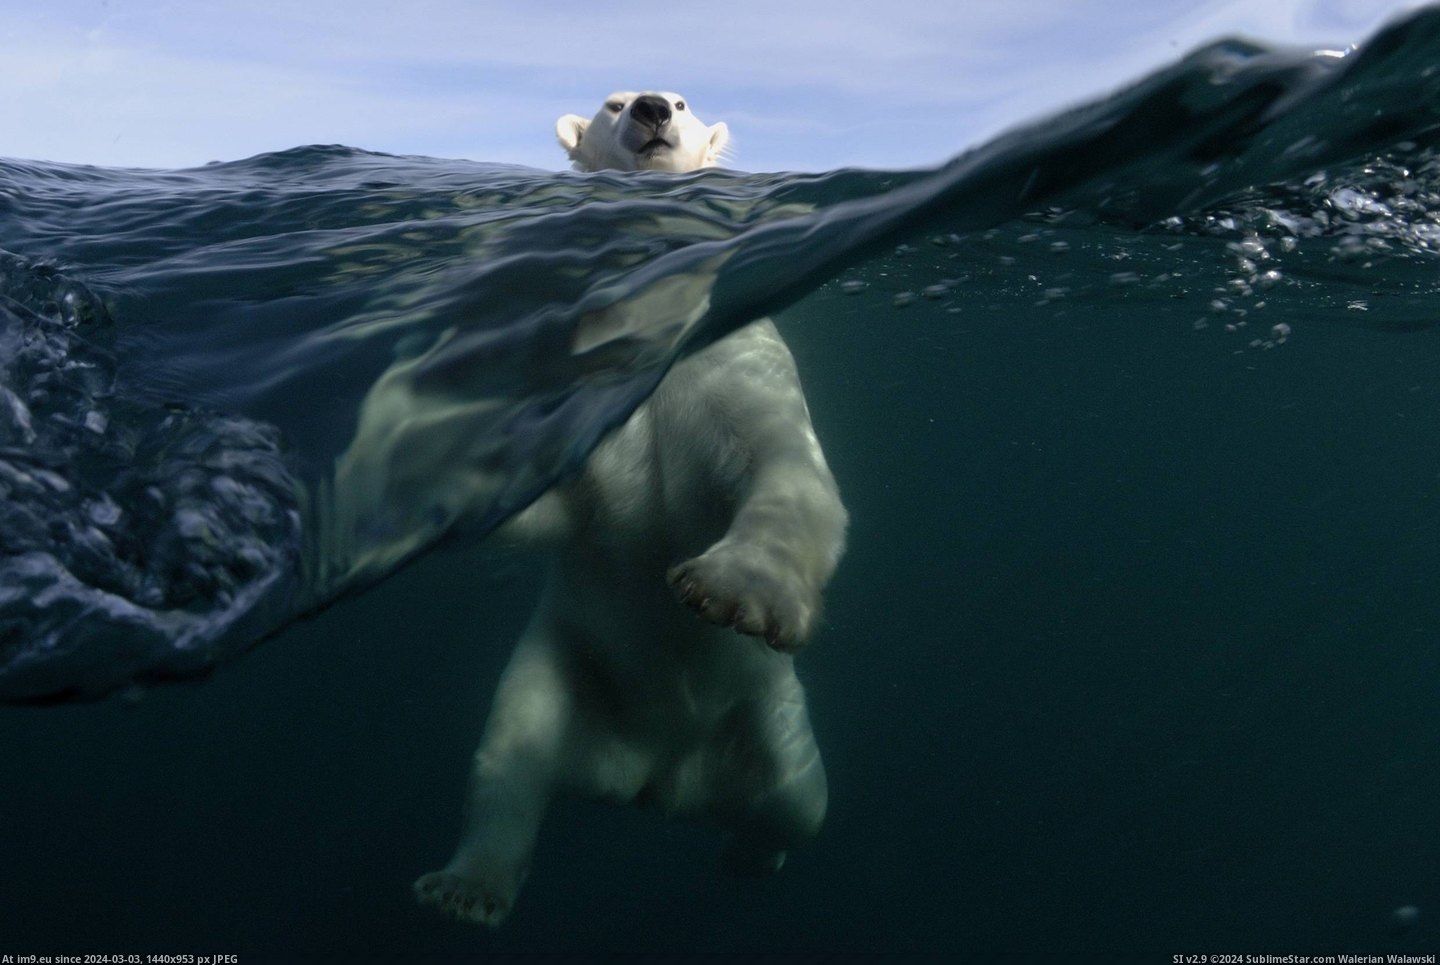 #For #Small #Shot #Got #Polar #Bears #Joe #Bunni #Finally #Spent #Photographer #Boat [Pics] Photographer Joe Bunni spent three days on a small boat looking for polar bears and finally got this shot Pic. (Изображение из альбом My r/PICS favs))